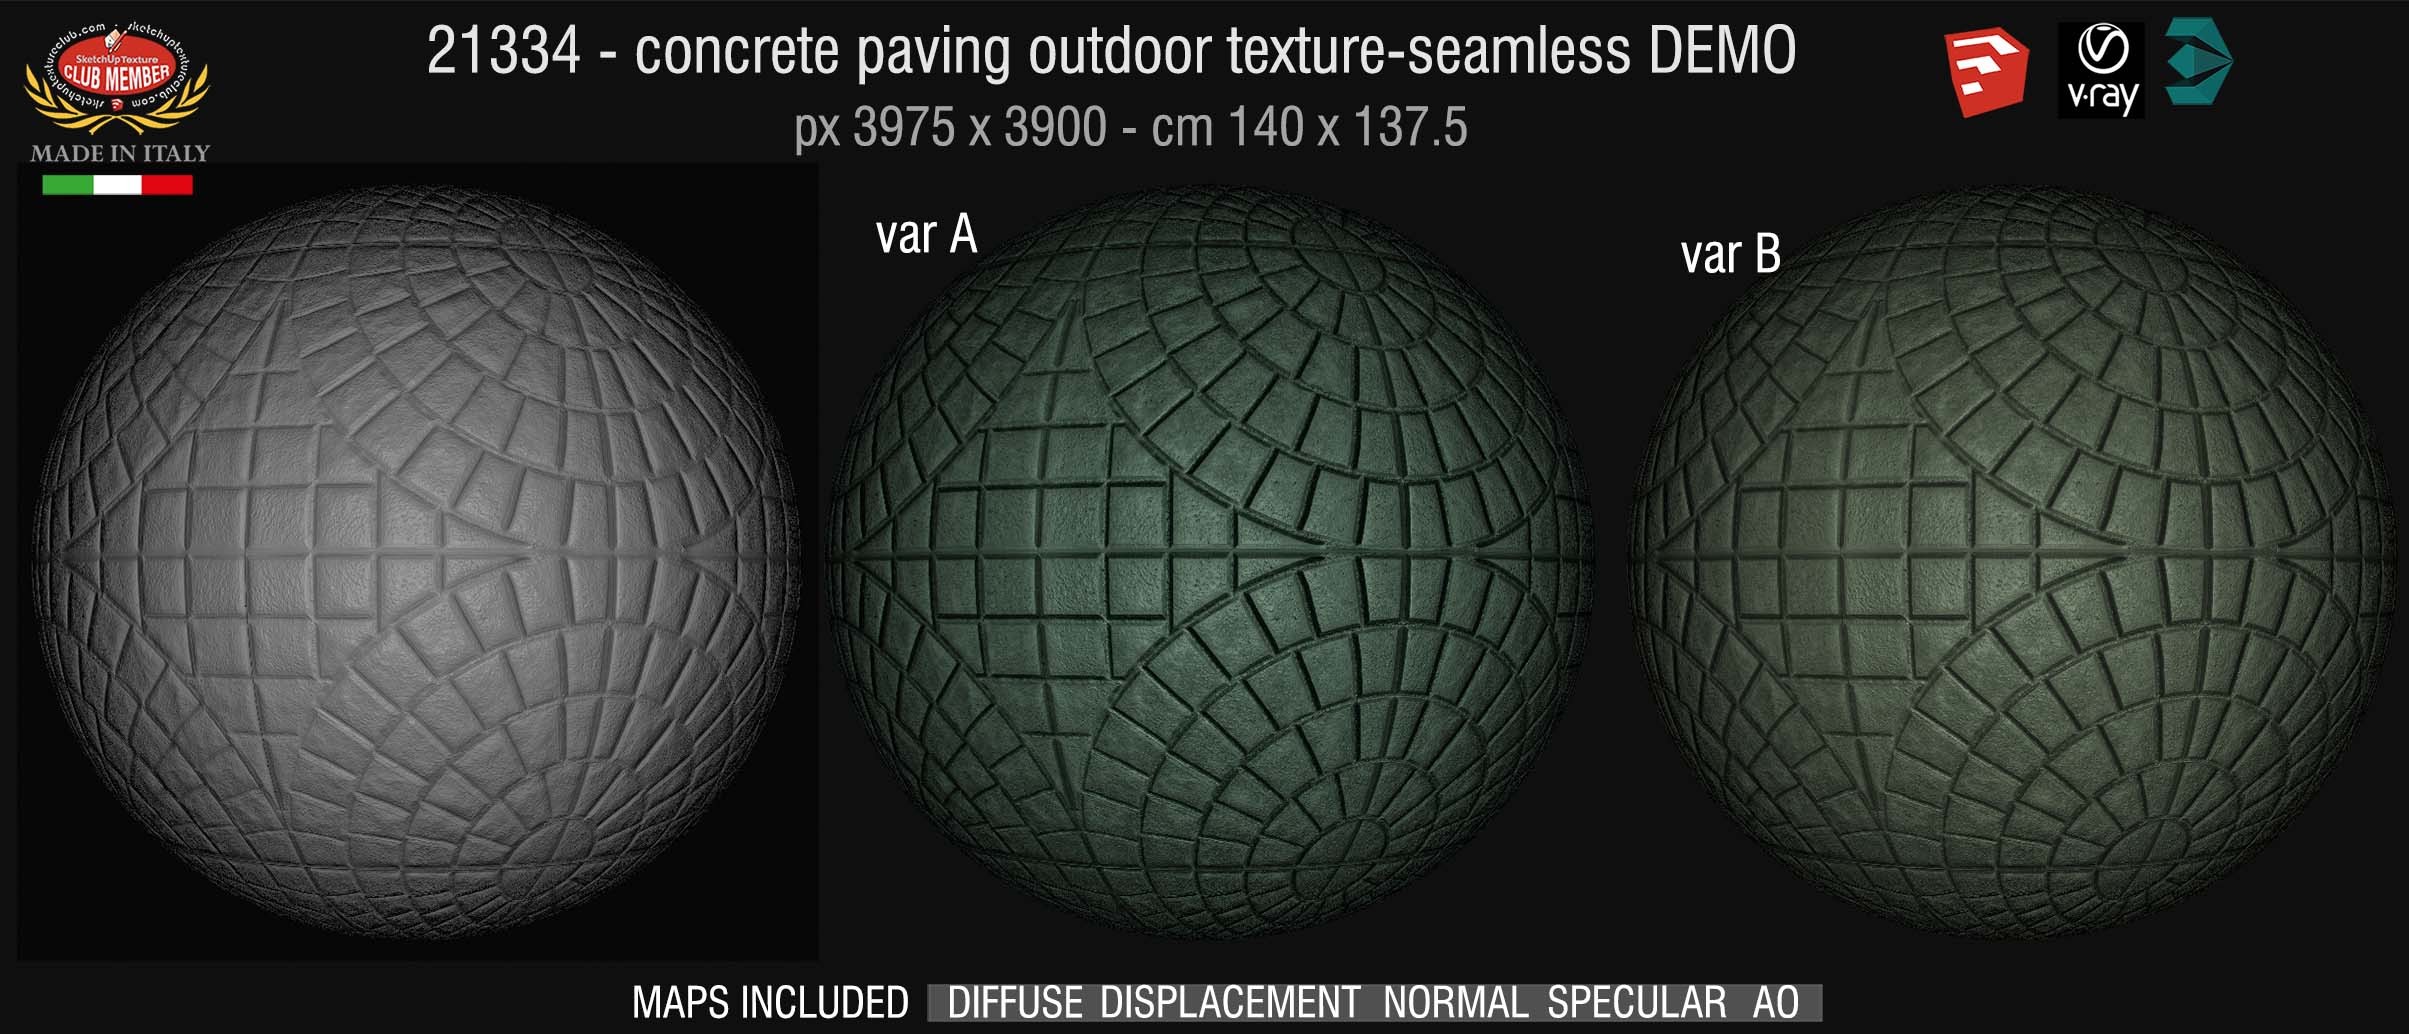 21334 HR concrete paving outdoor texture seamless + maps DEMO